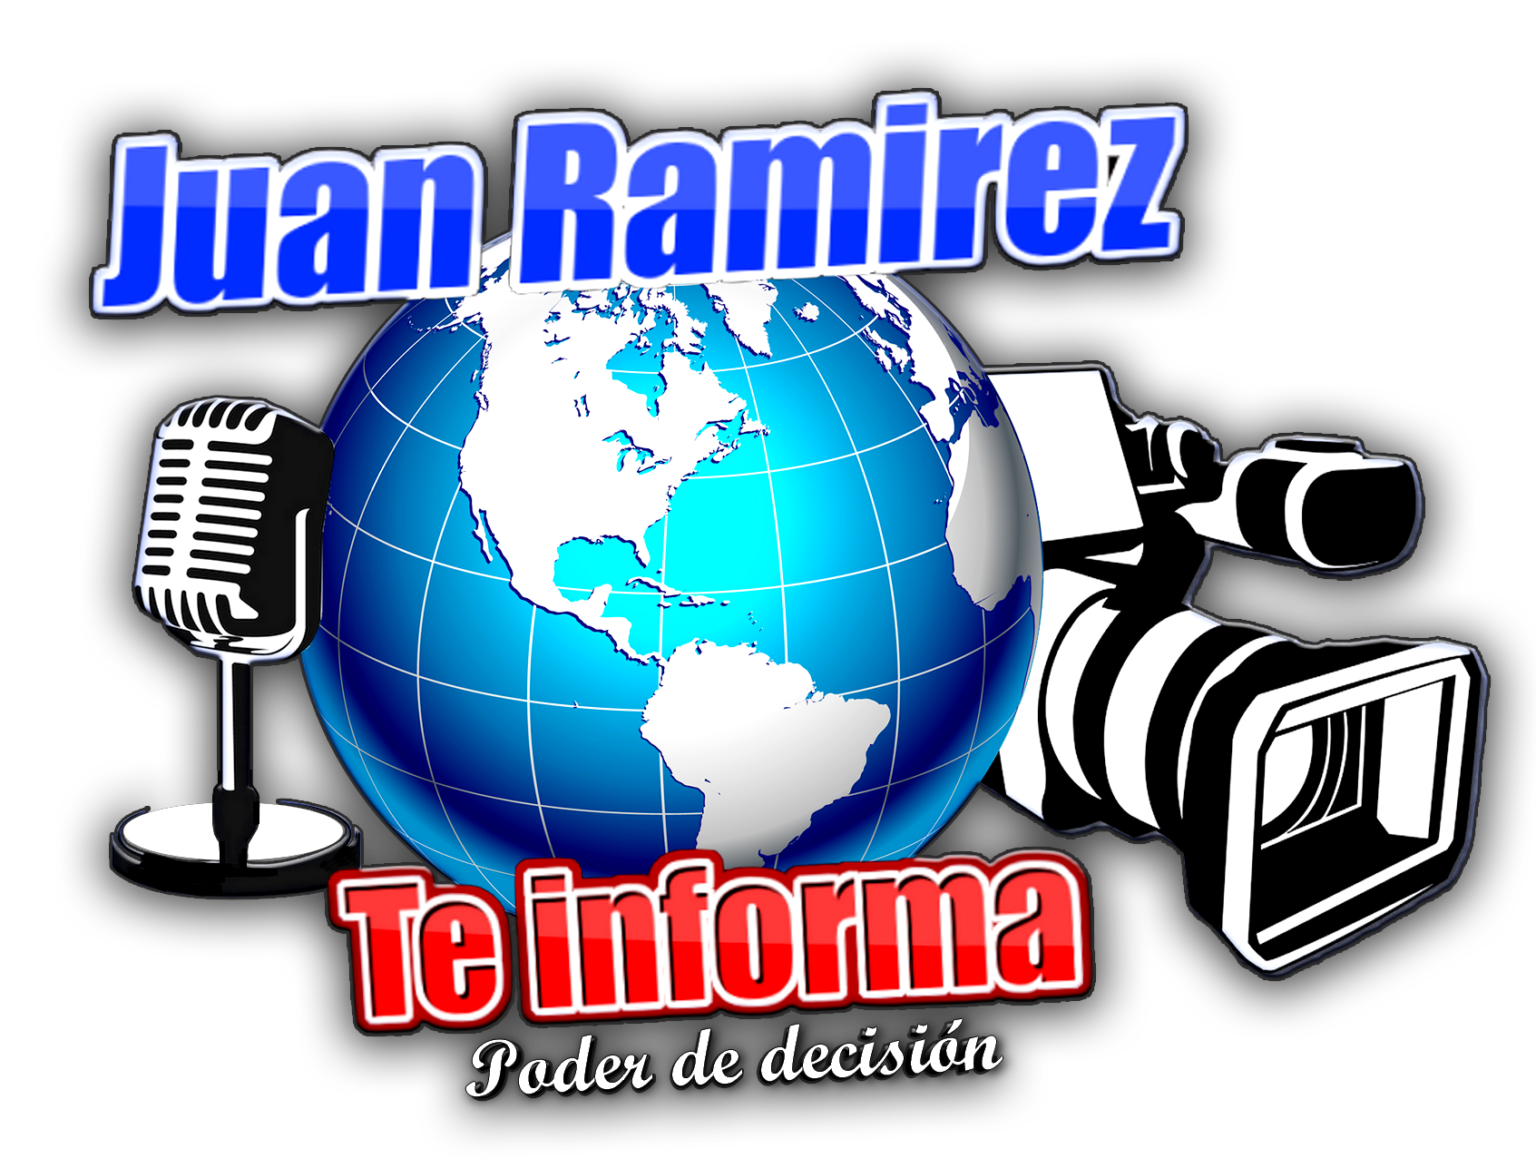 Radio Internet Juan Ram Rez Te Informa